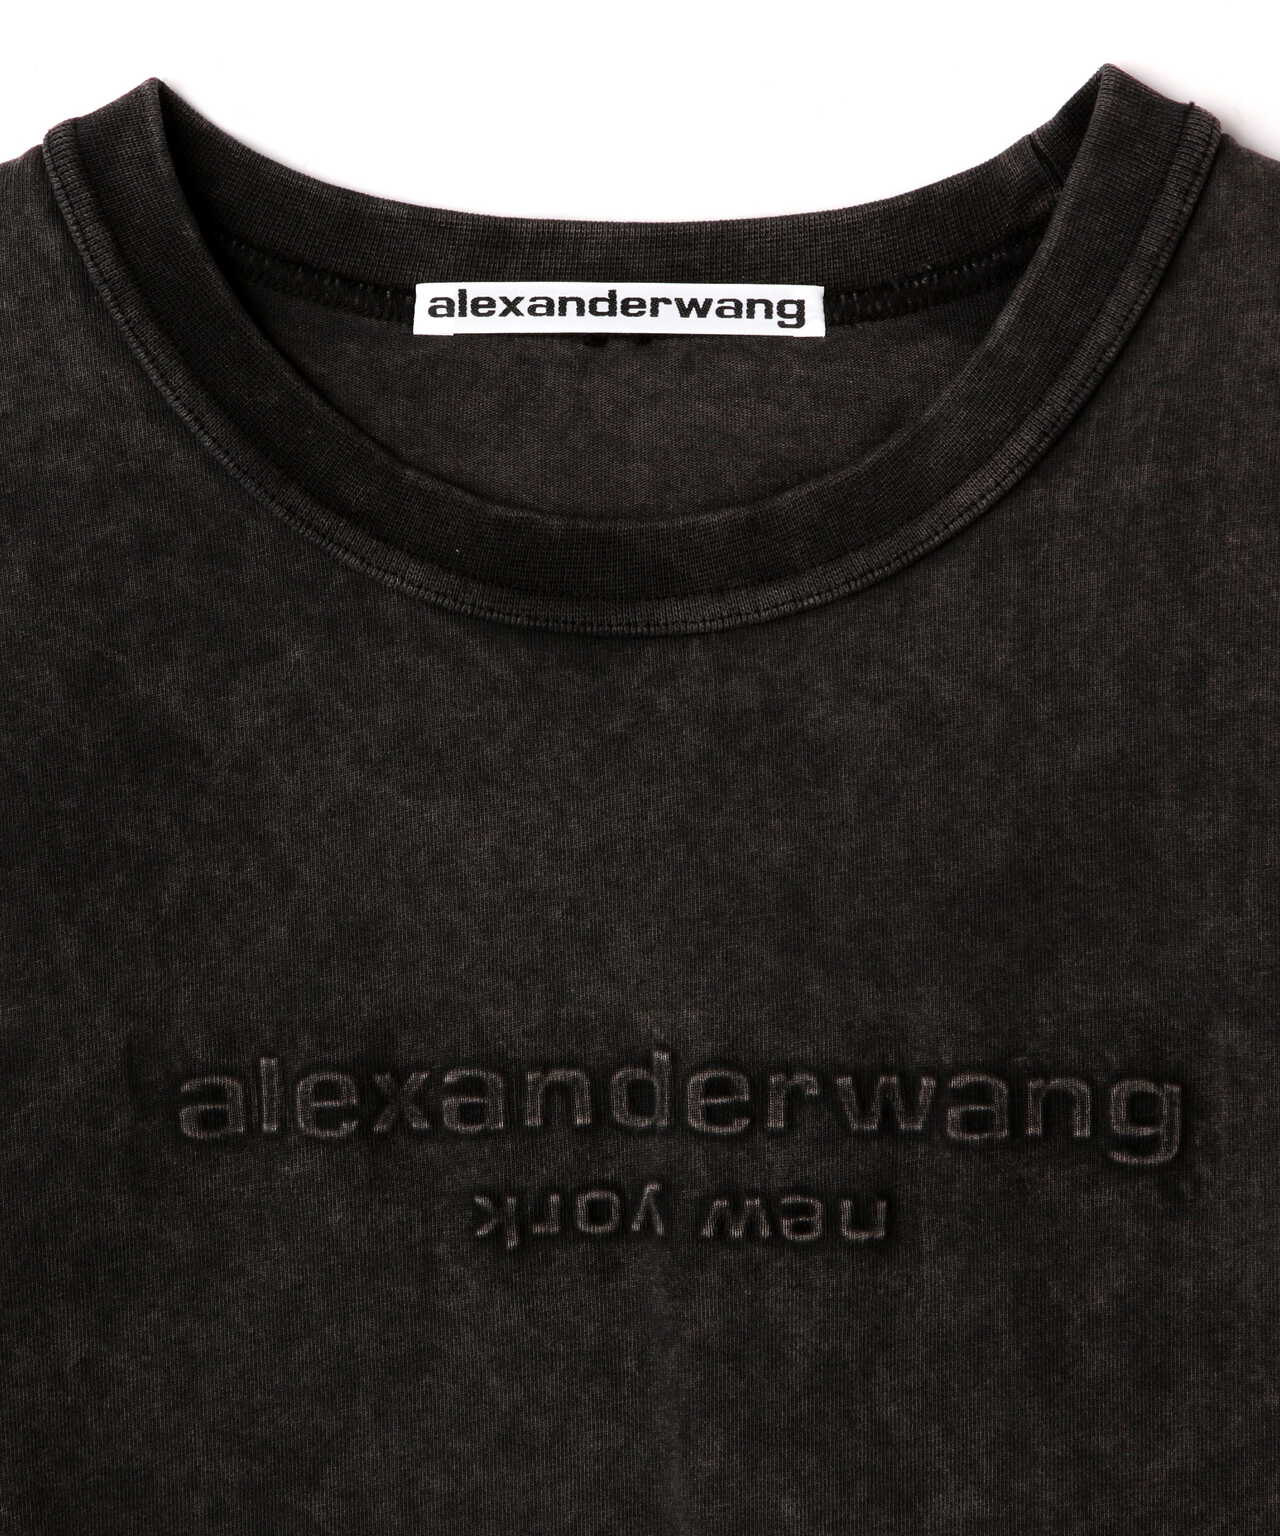 alexanderwang/アレキサンダーワン/SHORT SLEEVE T WITH EMBOSSED/ロゴTシャツ